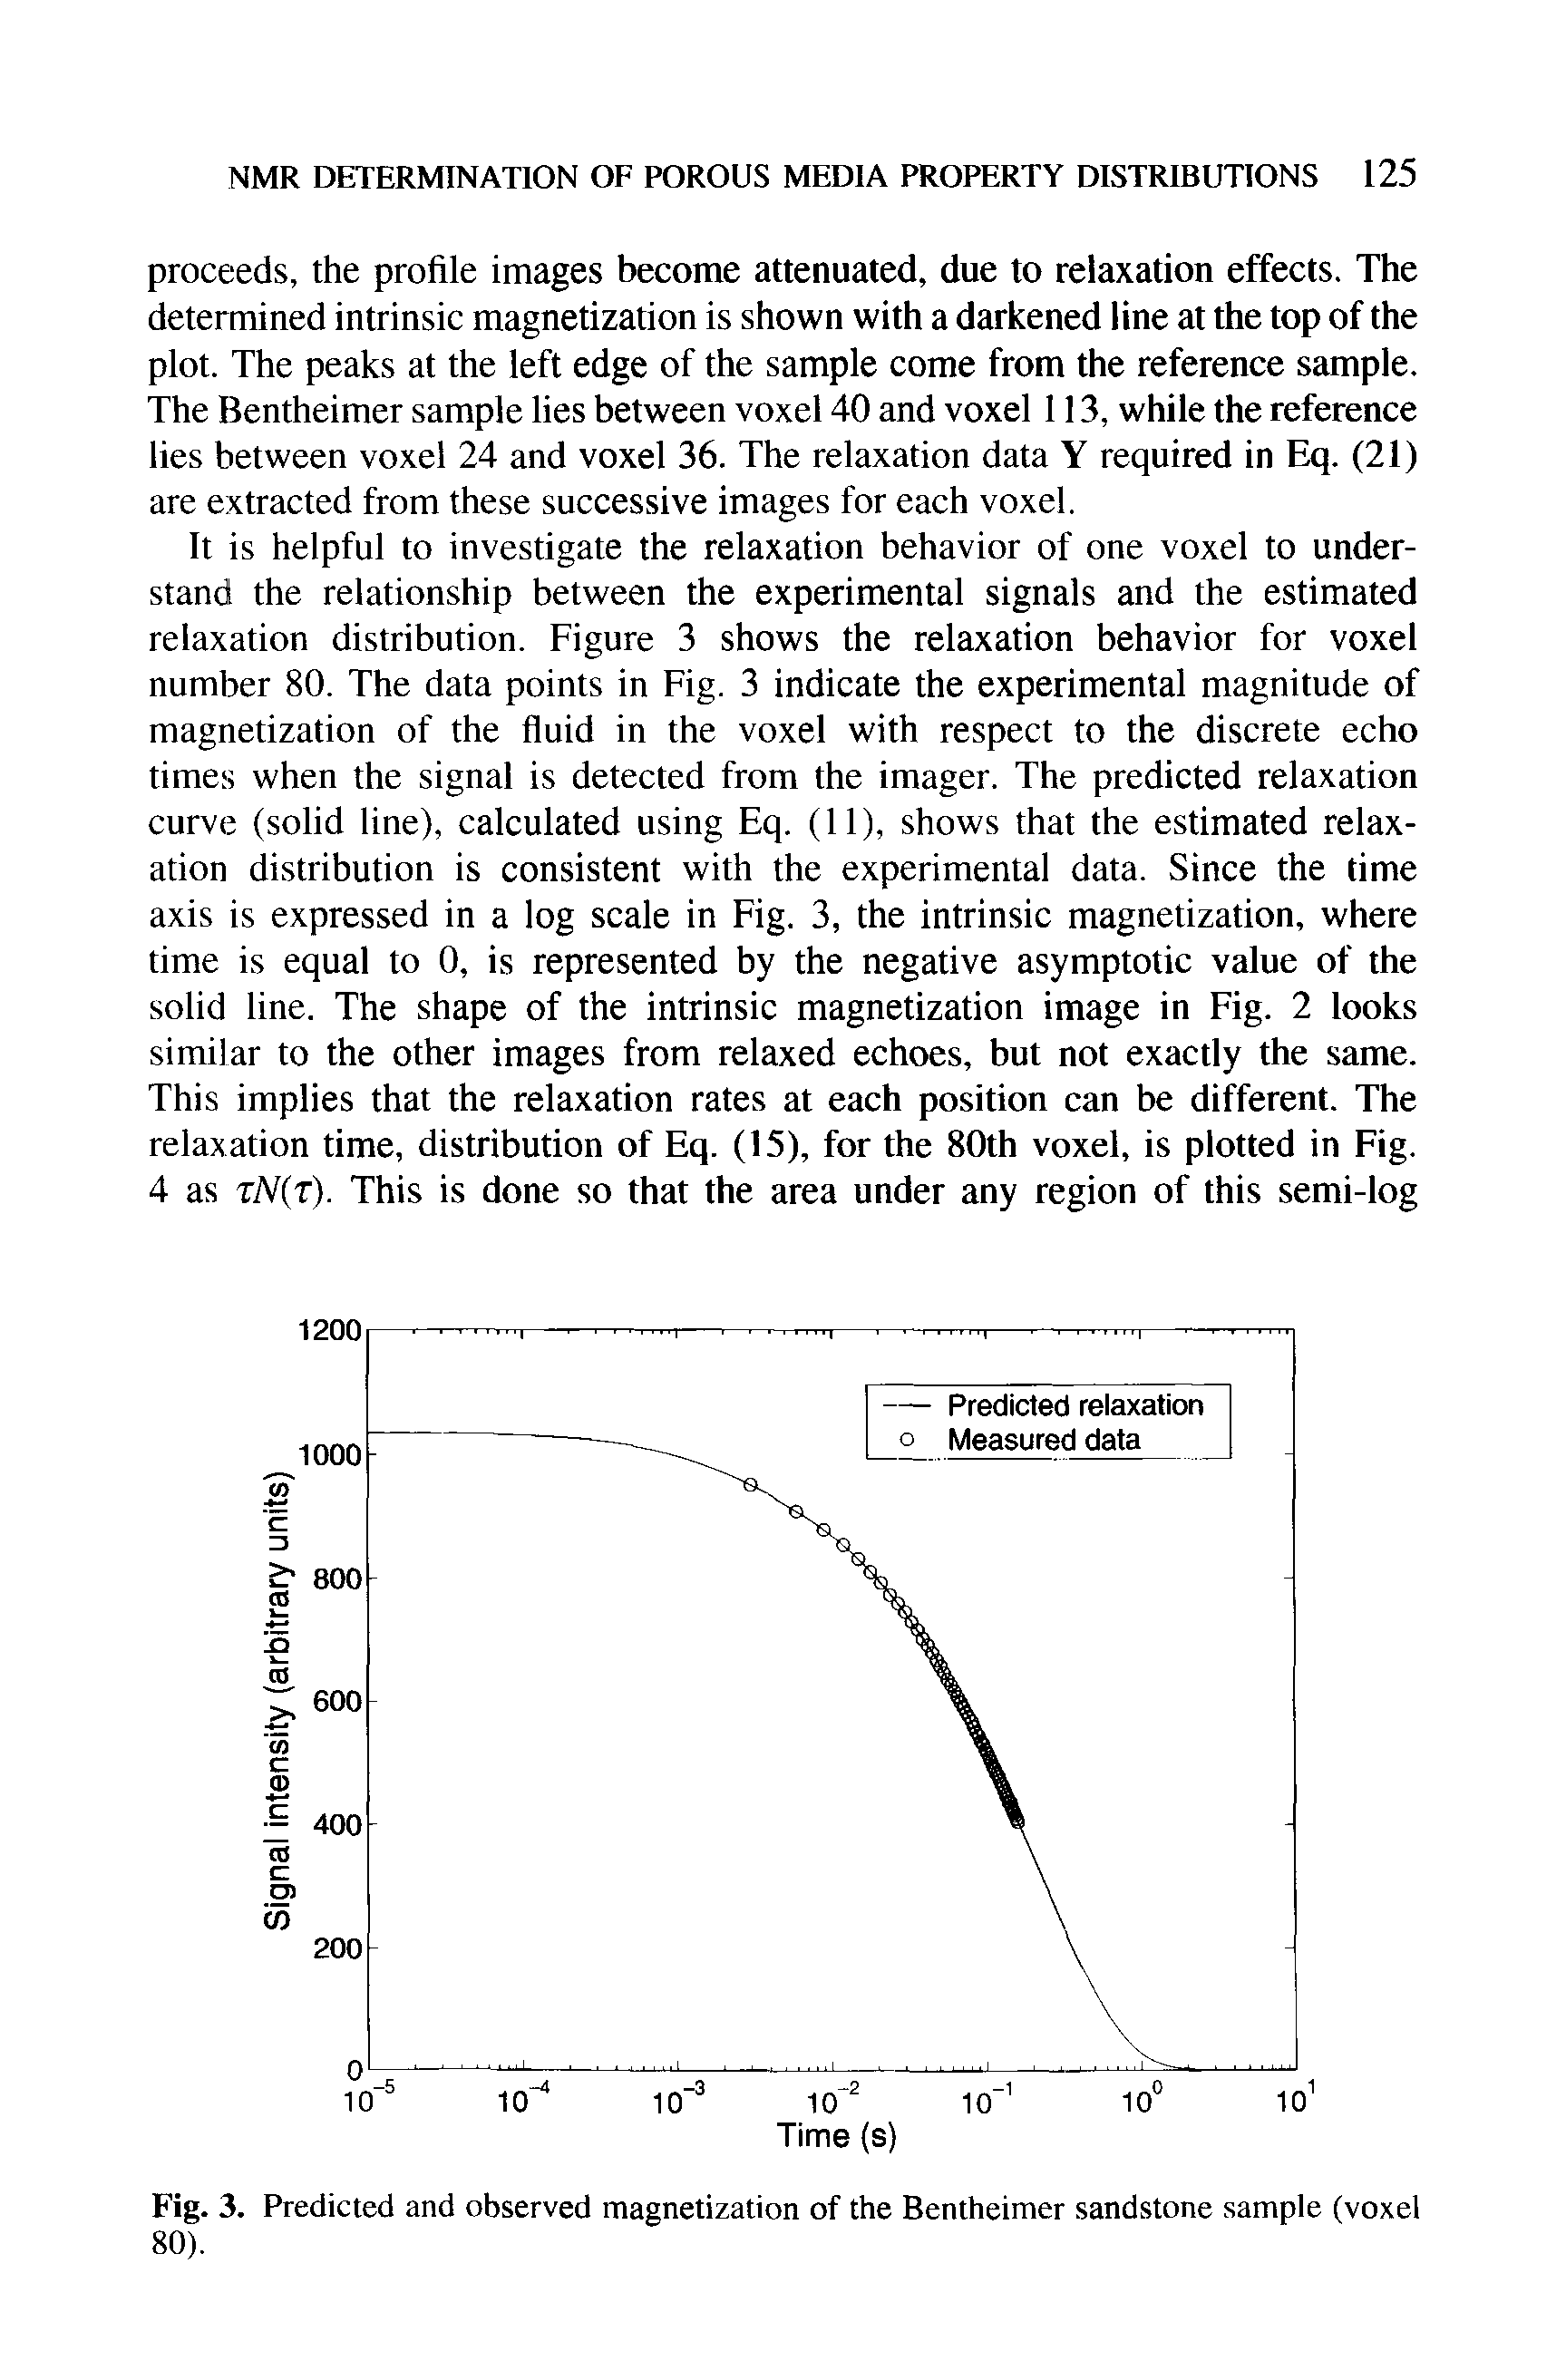 Fig. 3. Predicted and observed magnetization of the Bentheimer sandstone sample (voxel 80).